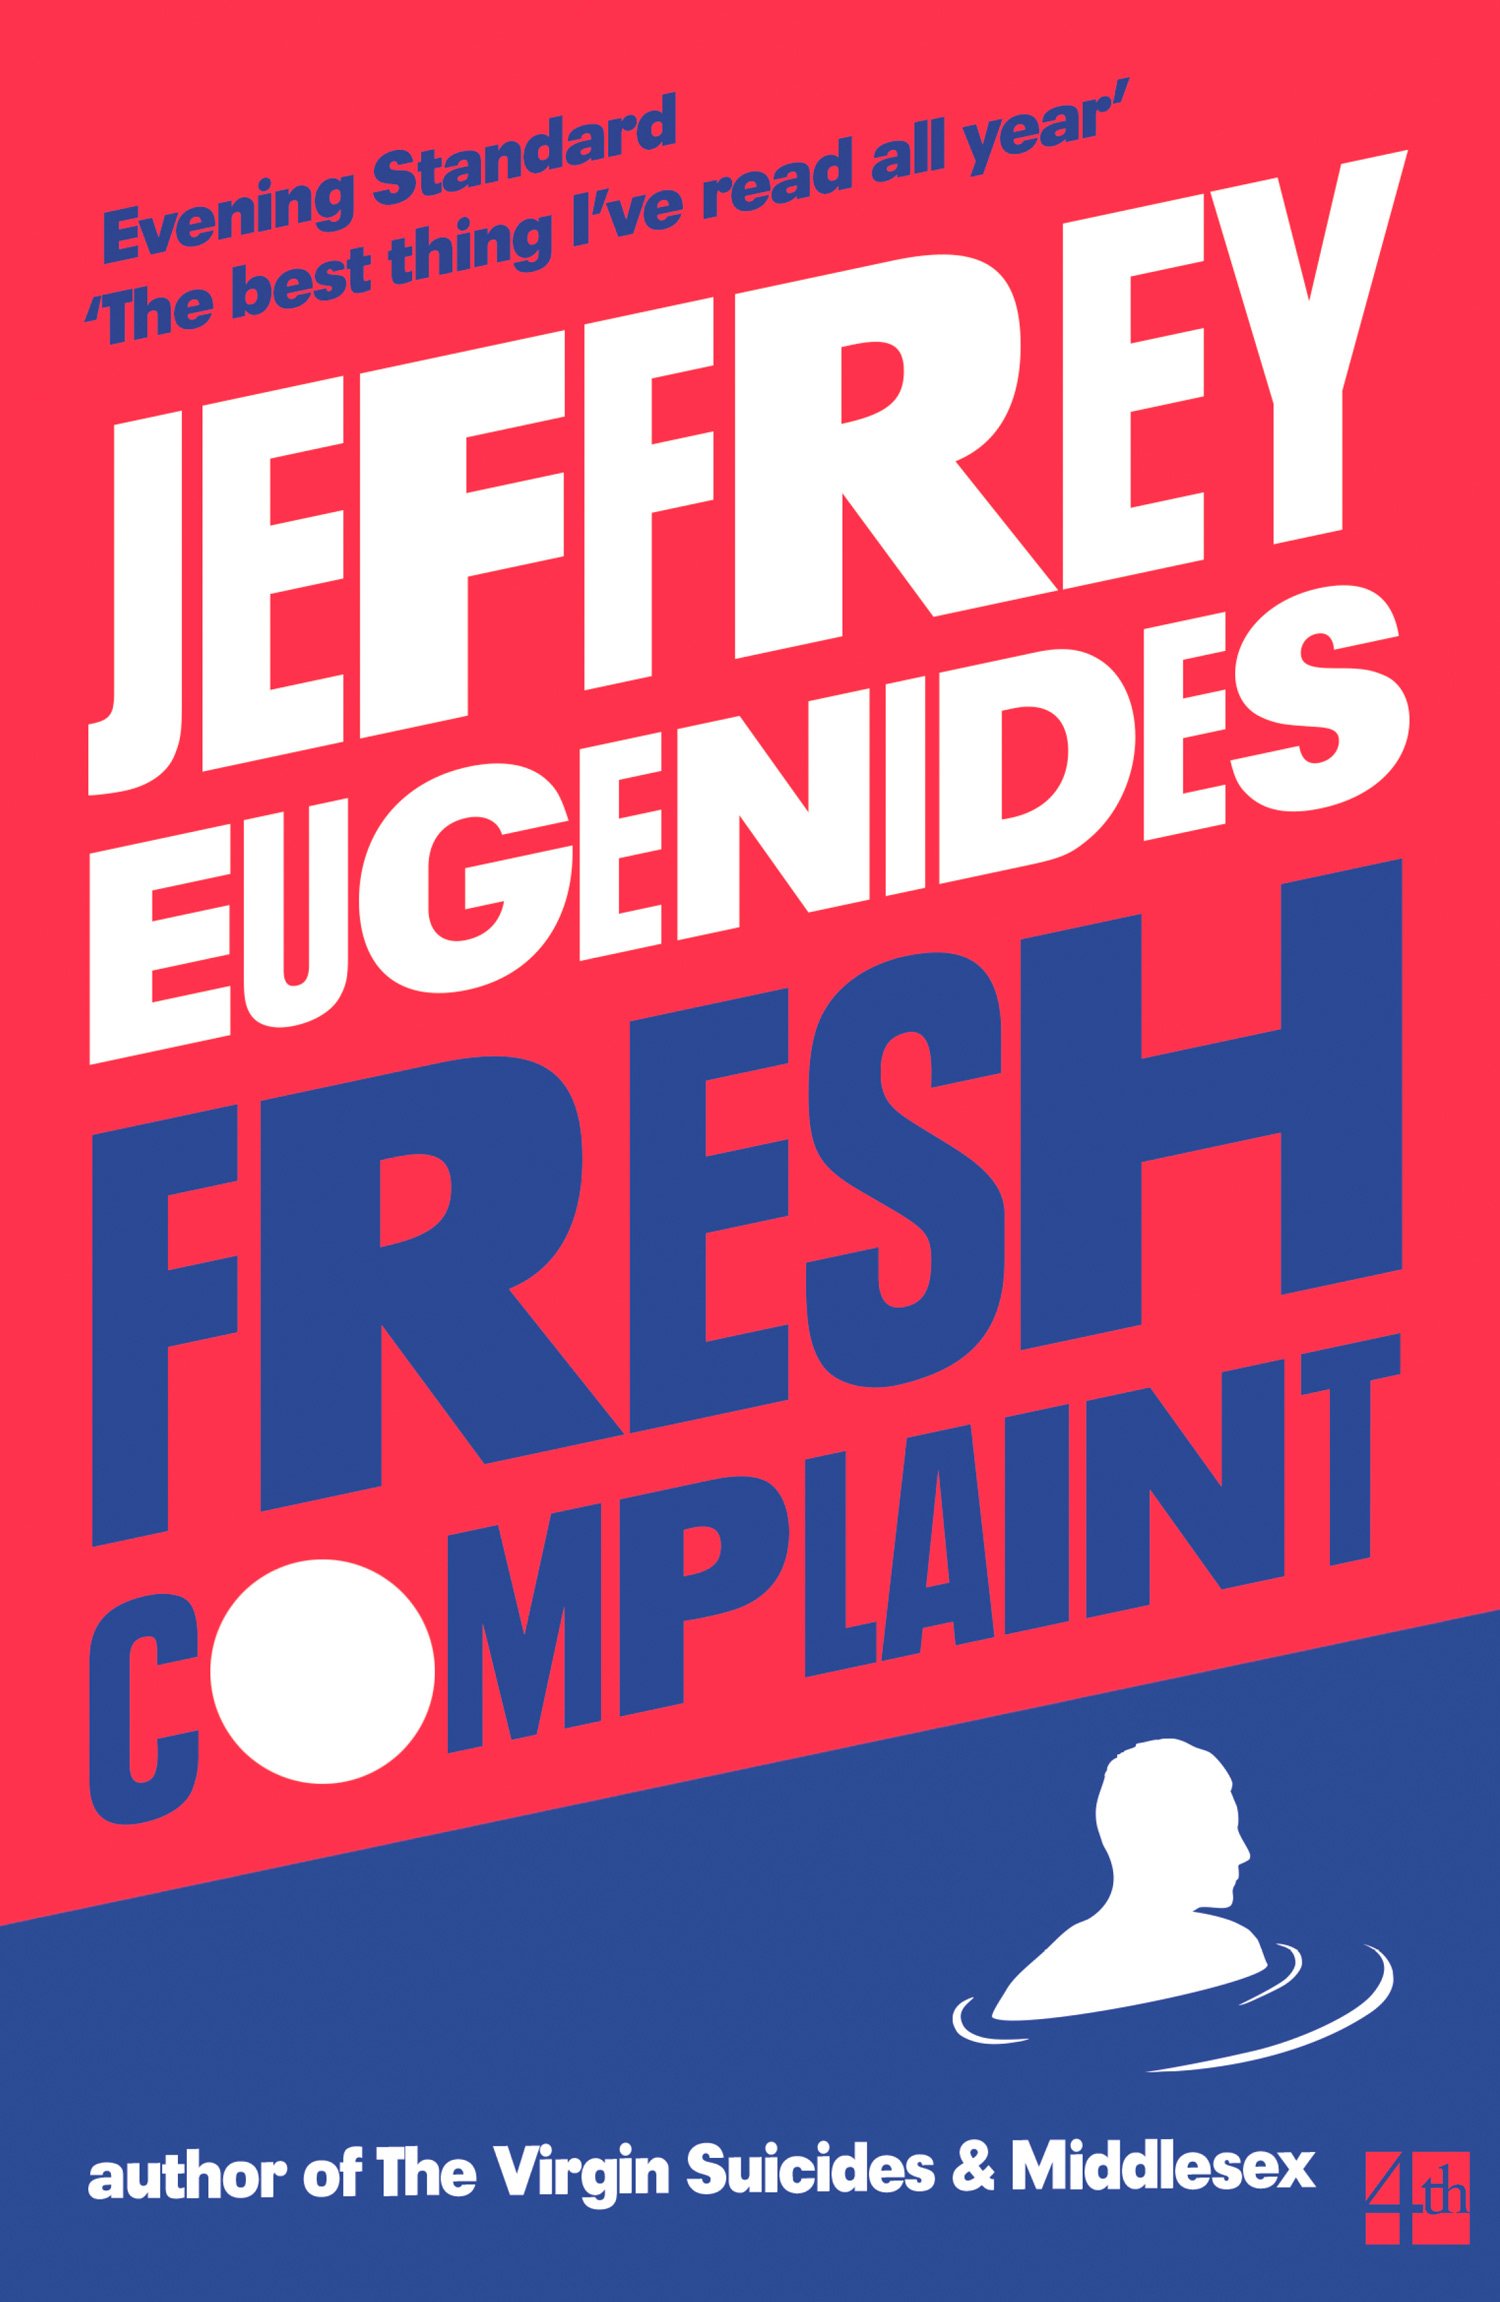 Fresh Complaint | Jeffrey Eugenides